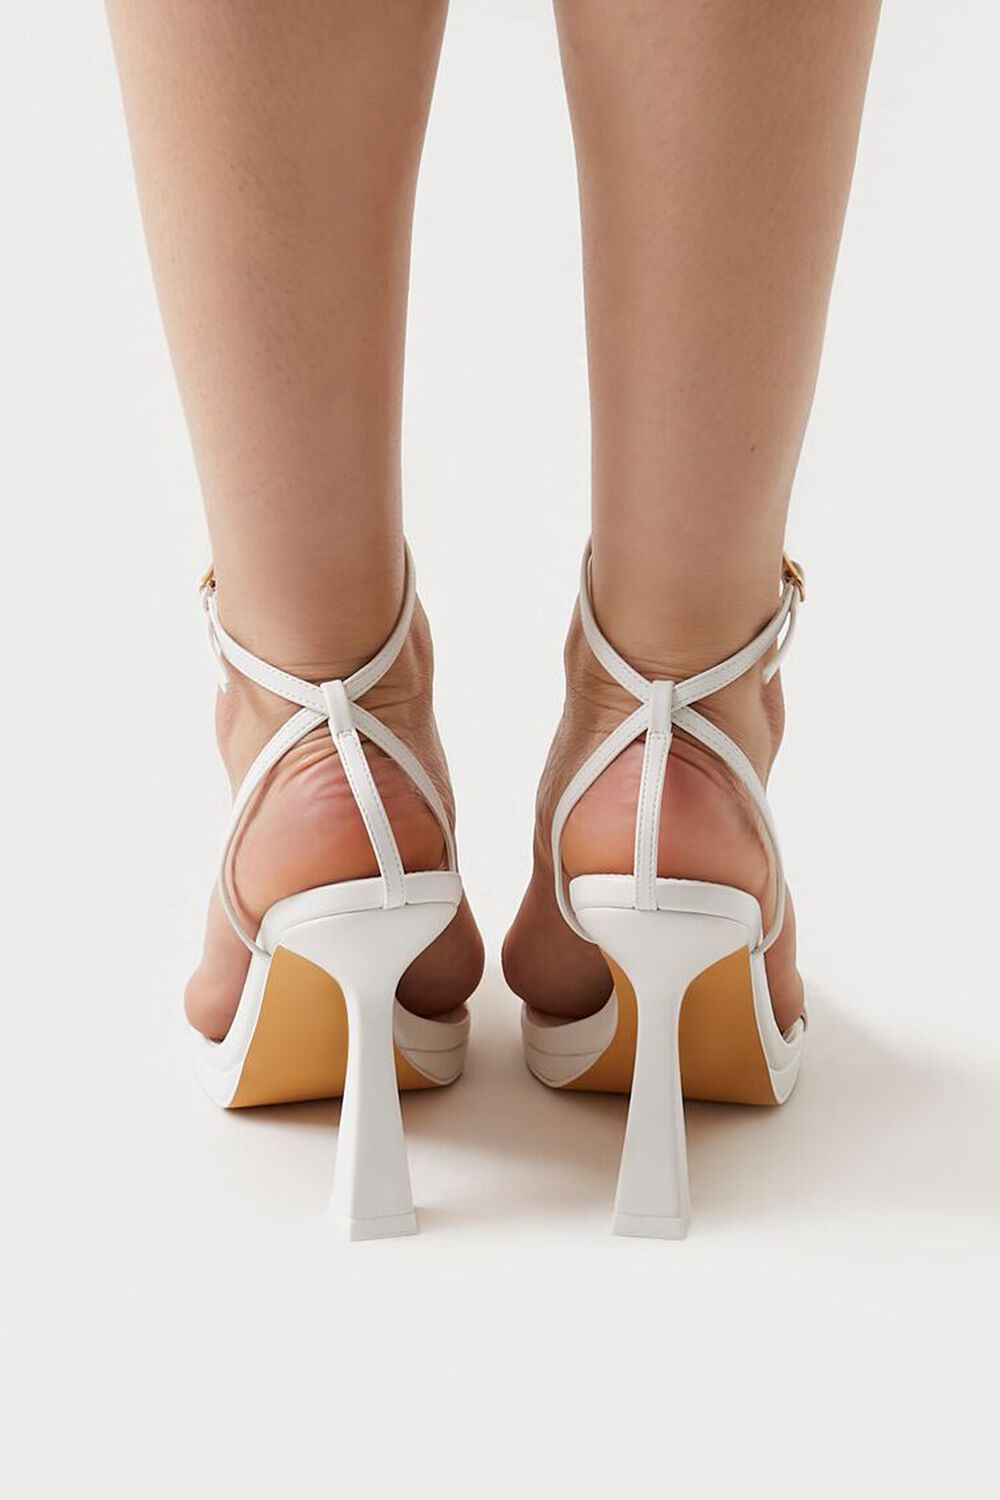 WHITE Square-Toe Stiletto Heels, image 3